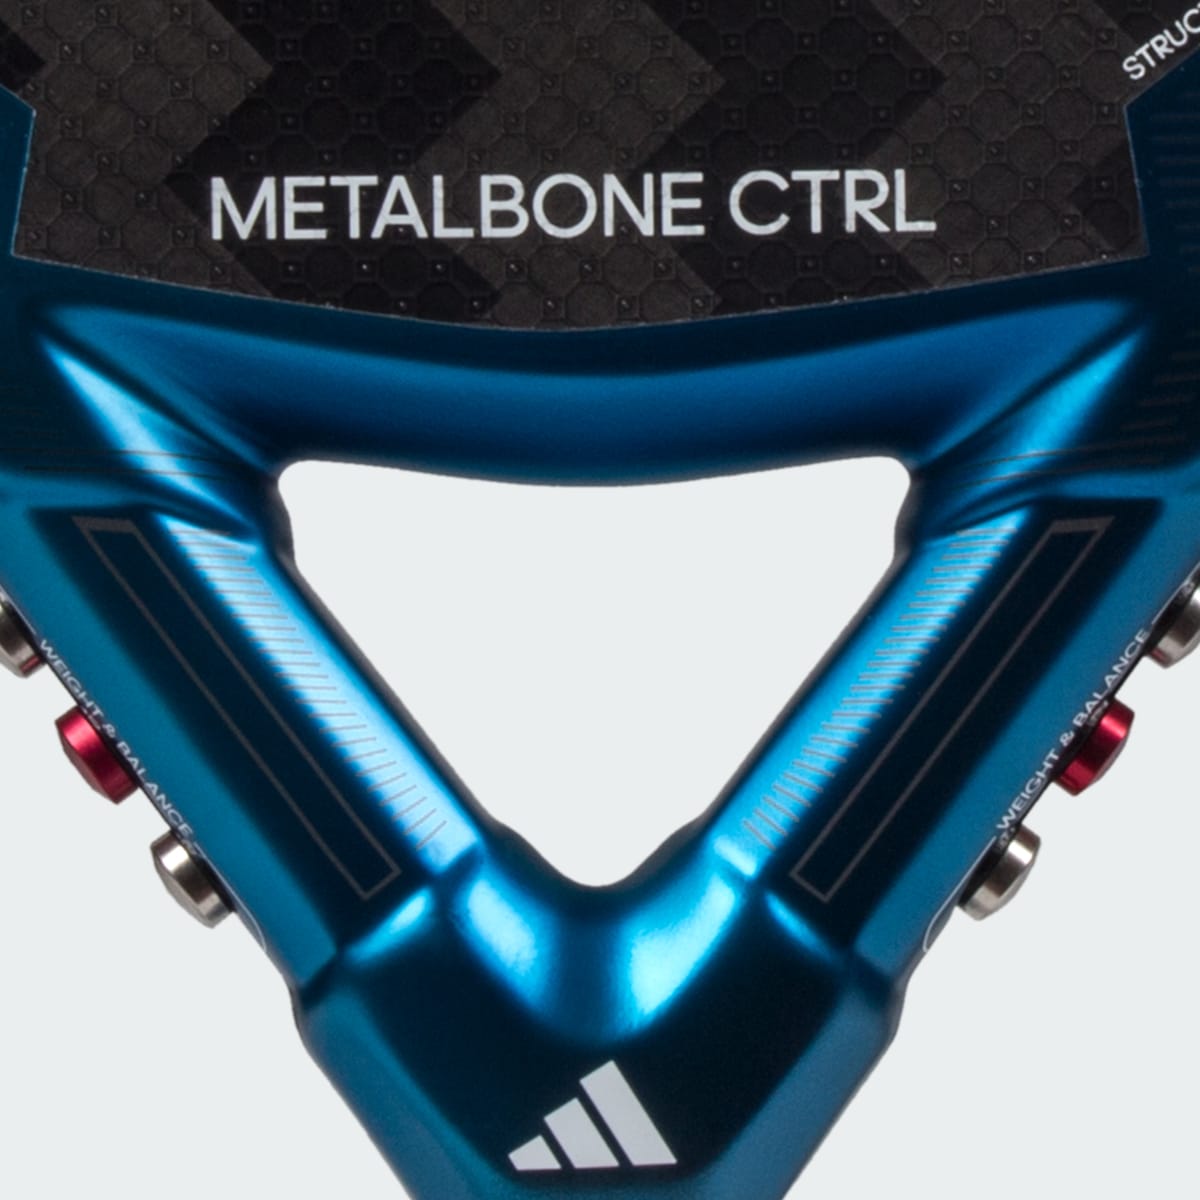 Adidas Metalbone CTRL 3.3 Padel Racket. 5